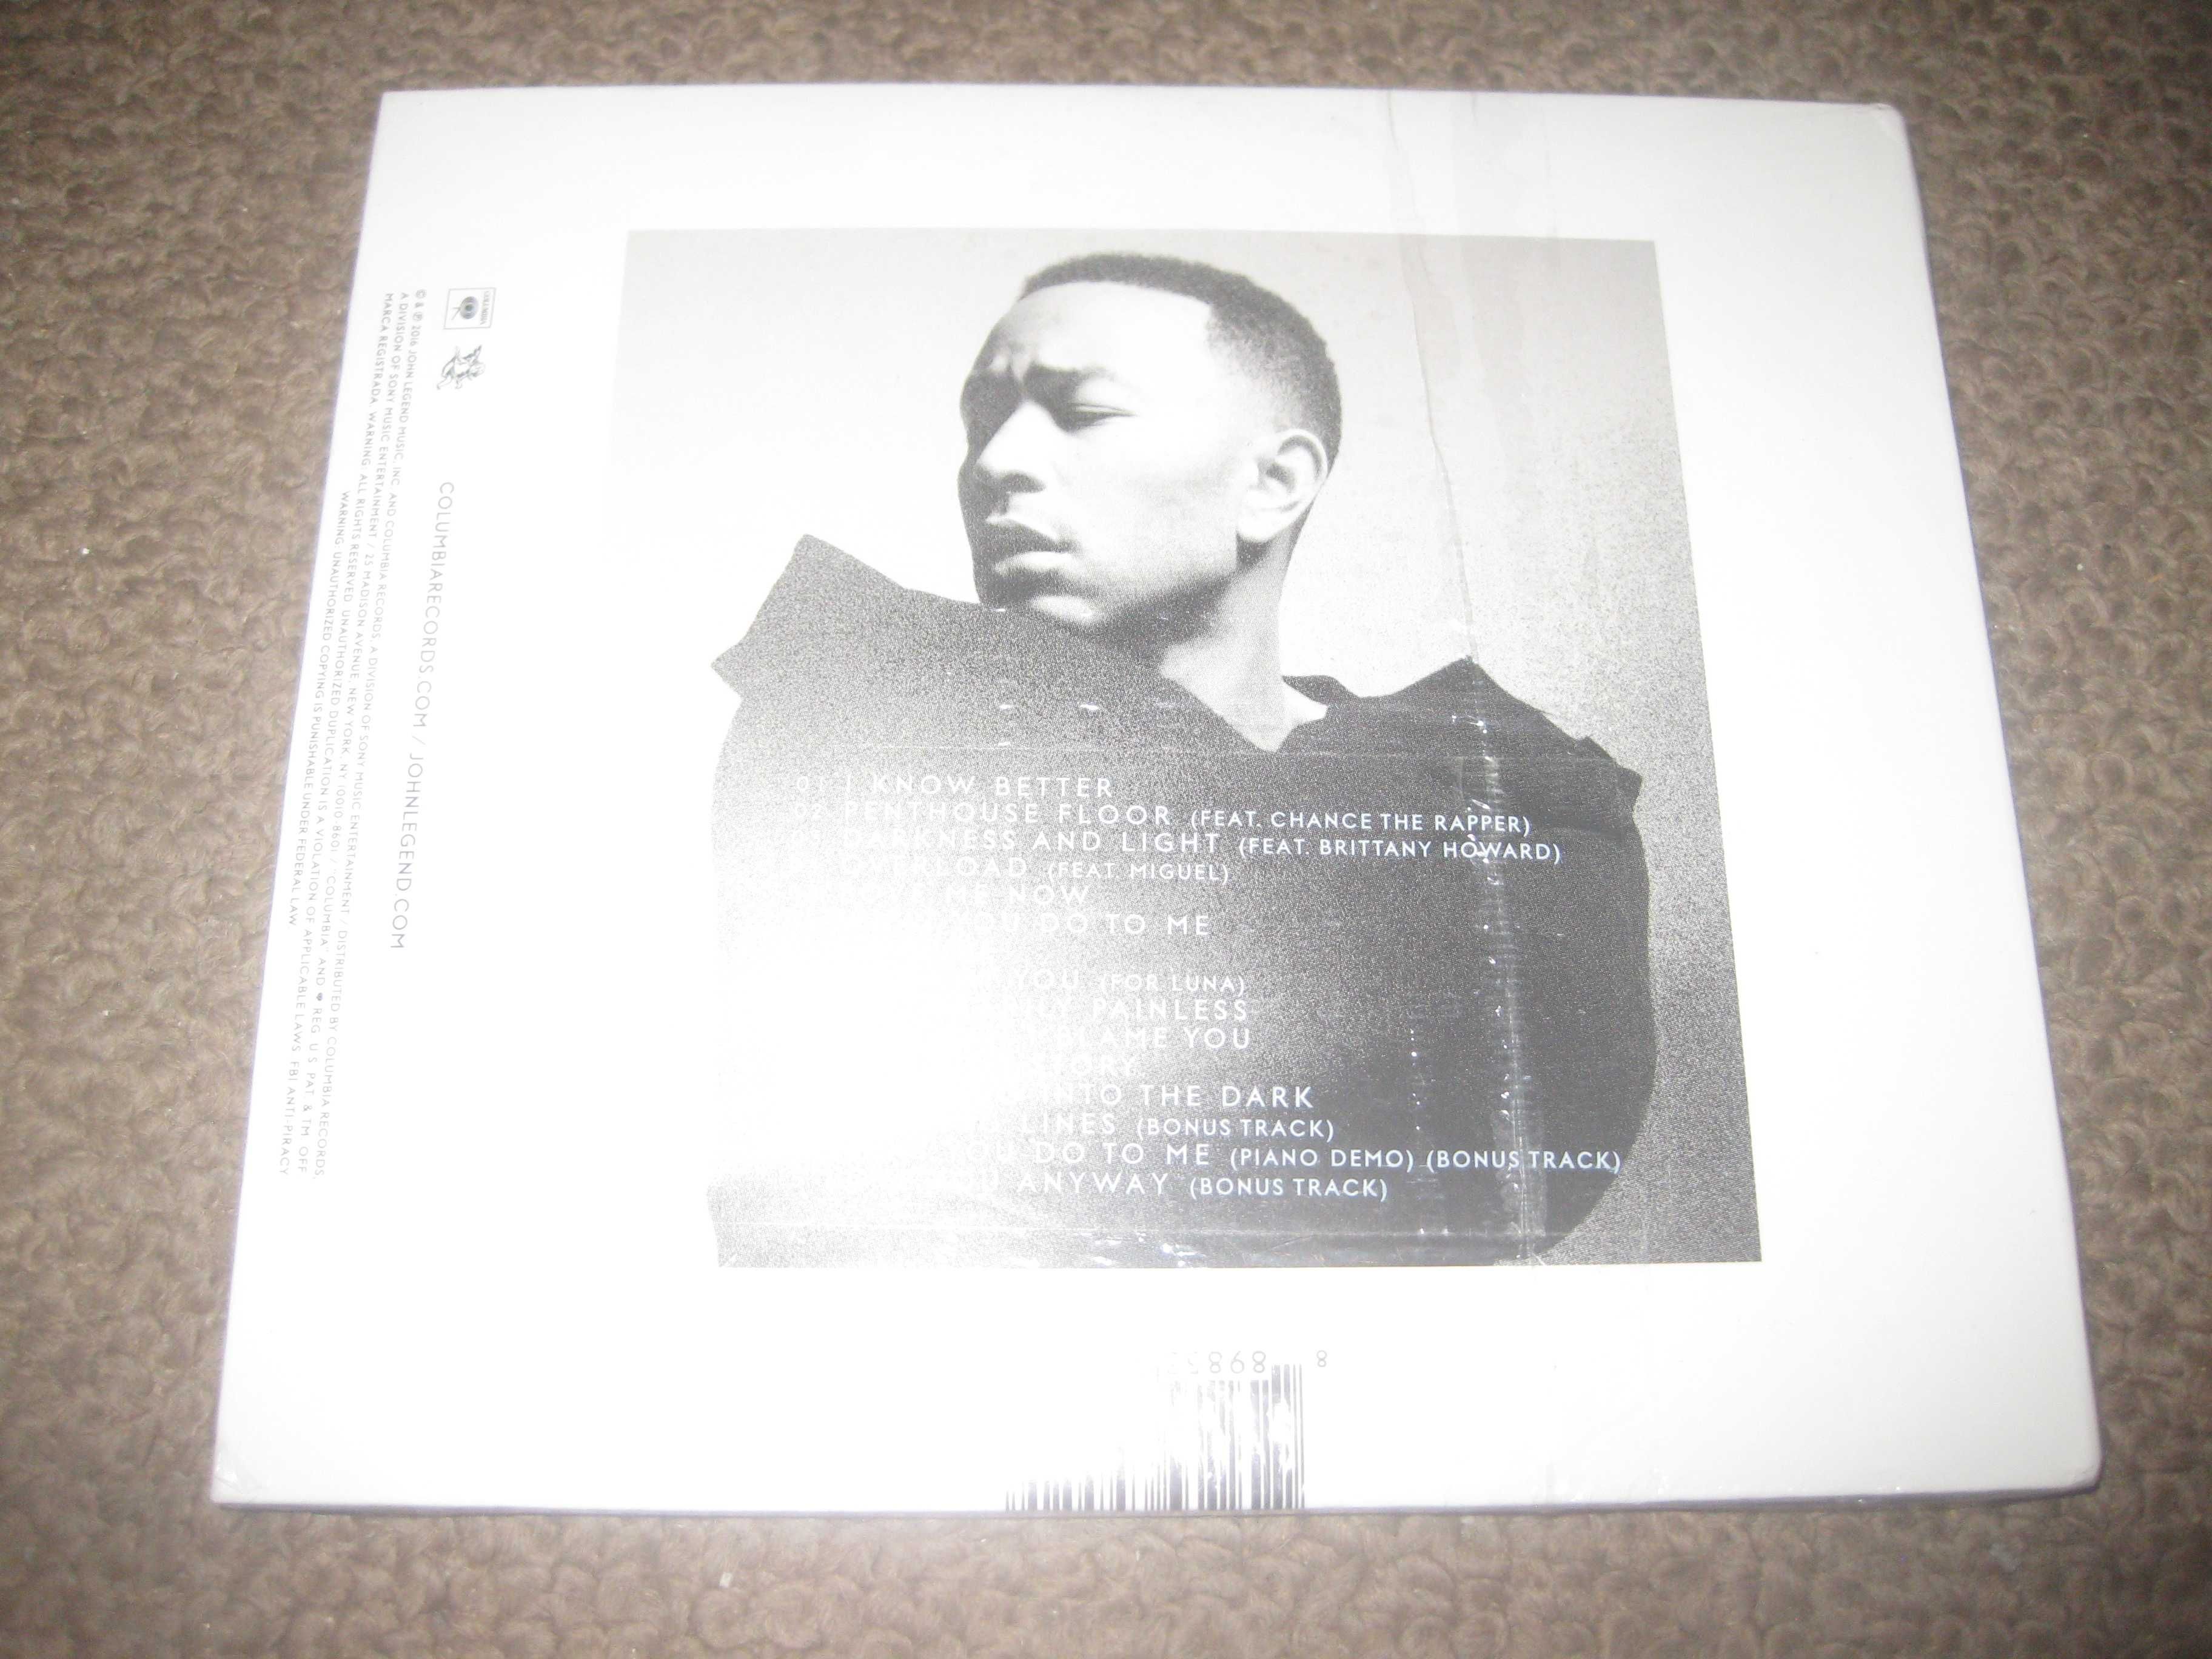 CD do John Legend "Darkness and Light" Selado!